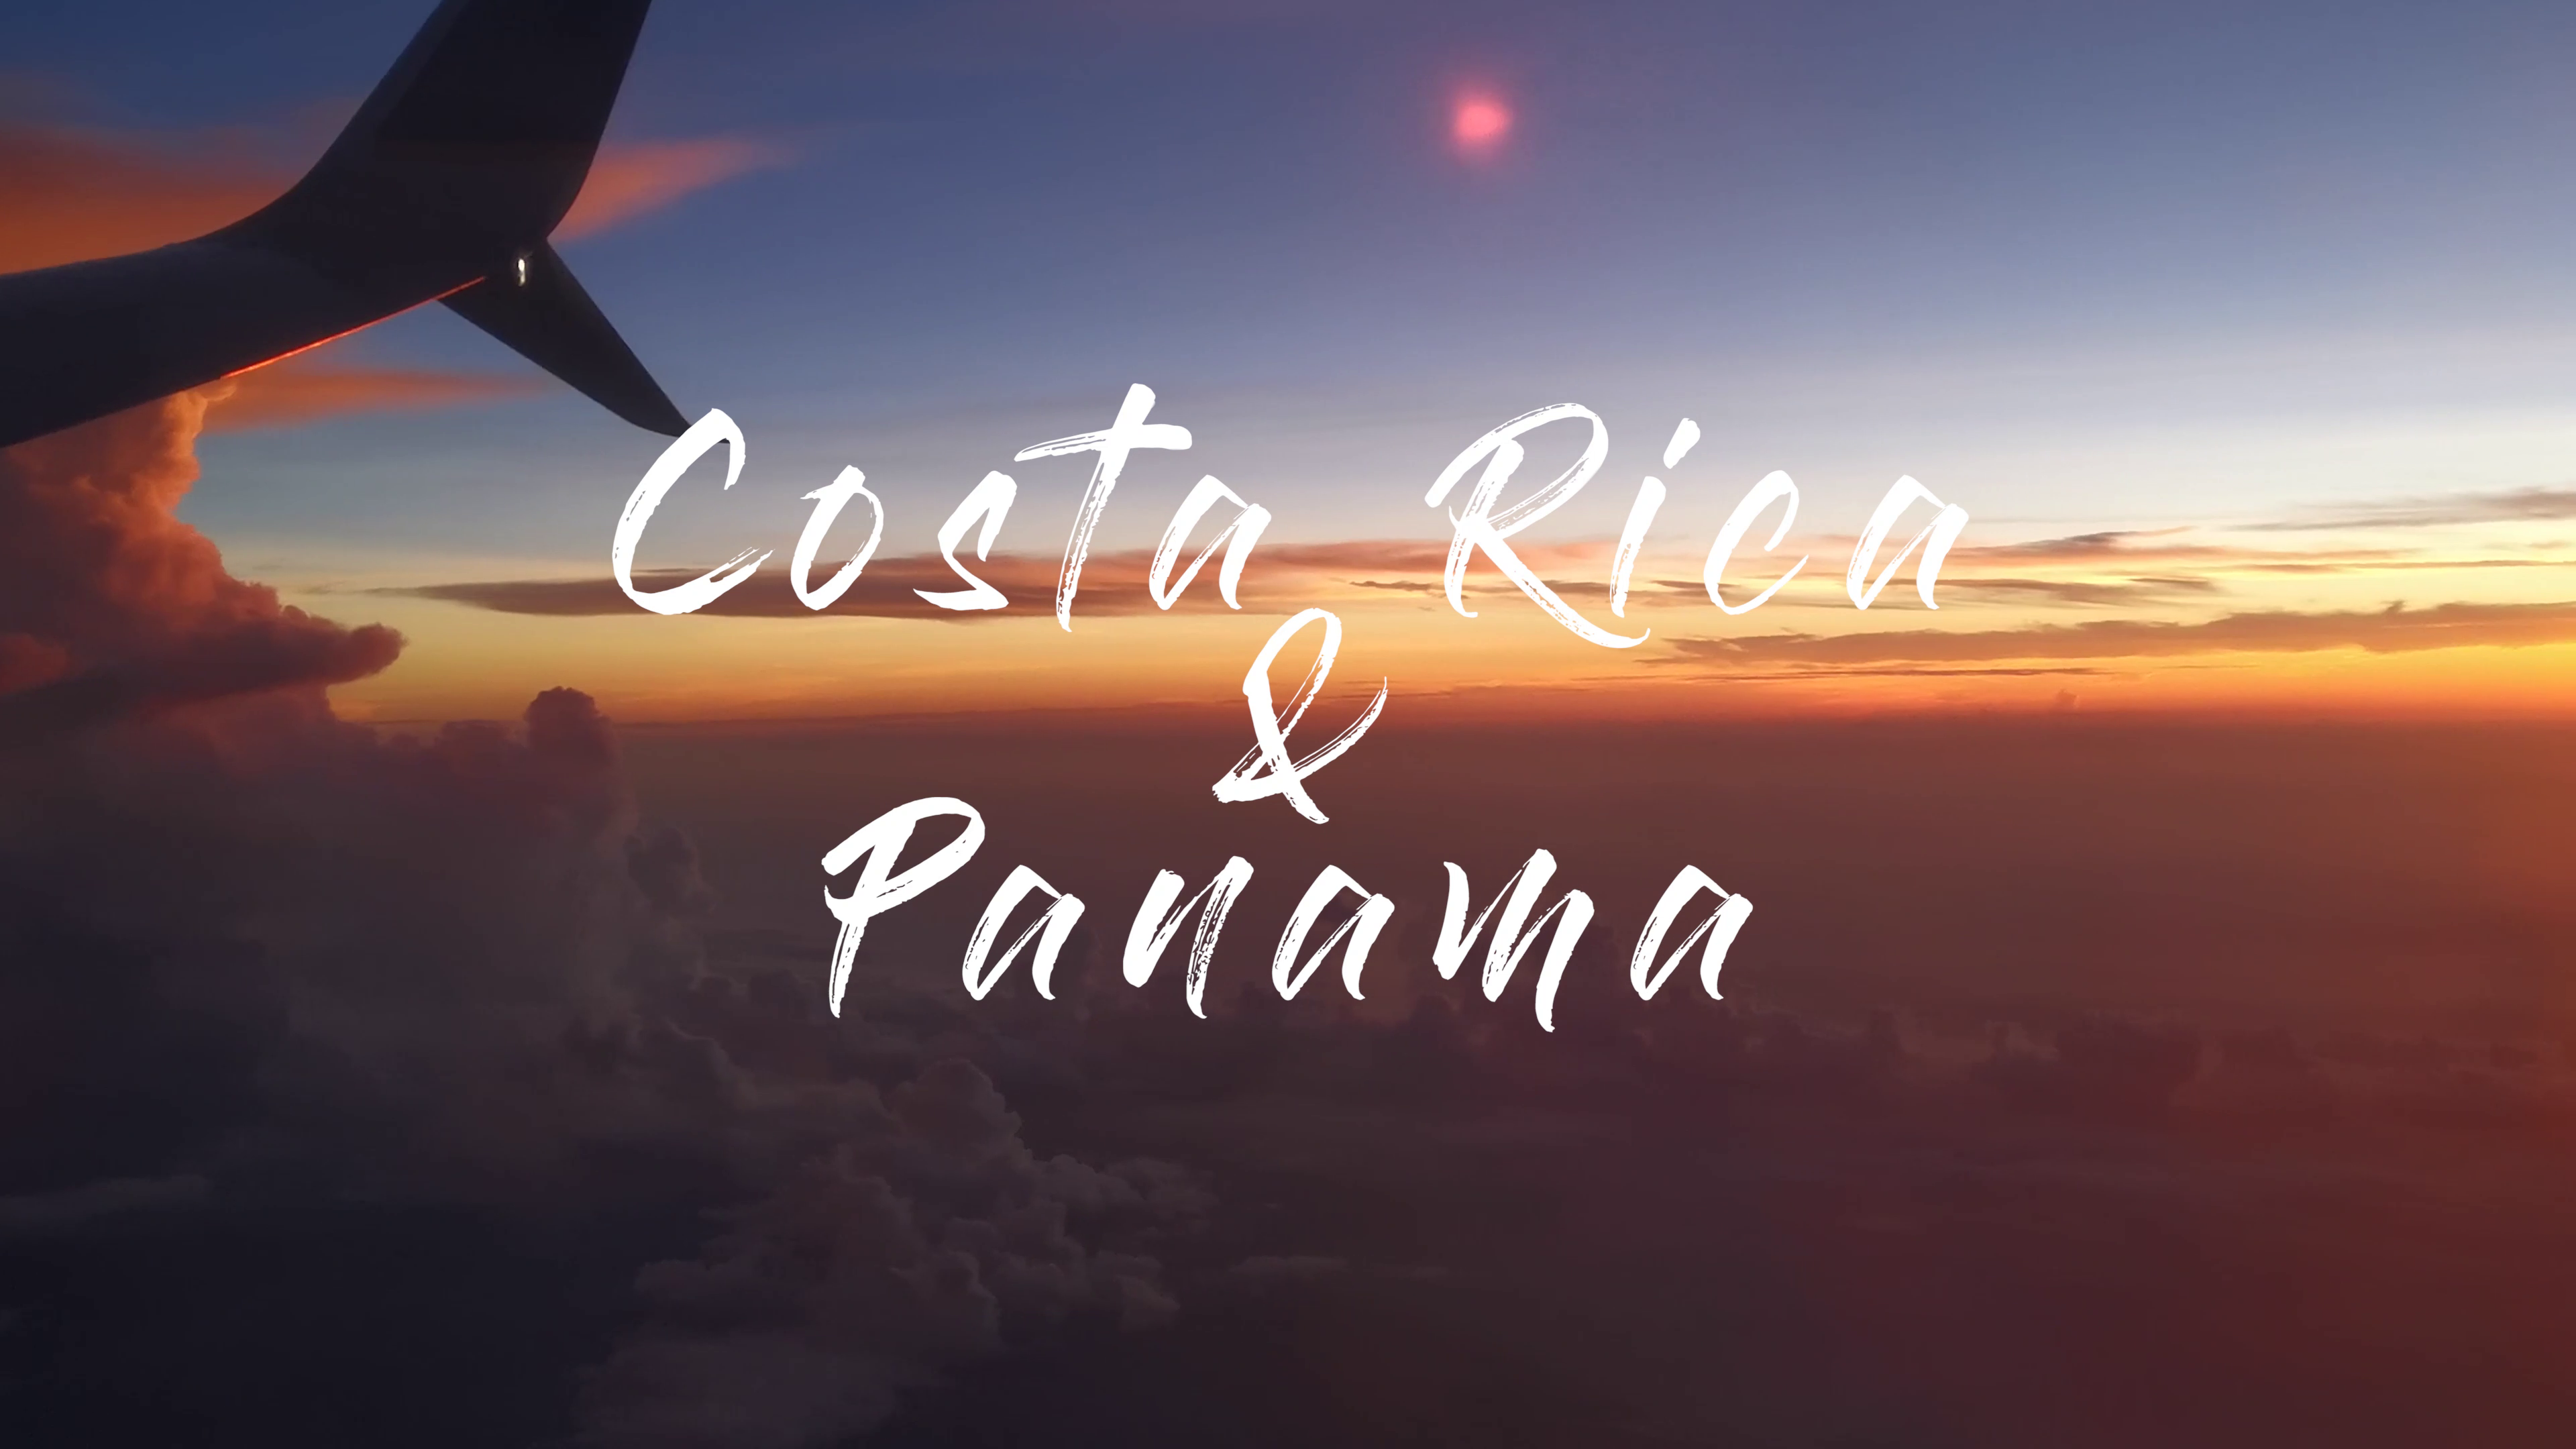 Video Costa Rica & Panama